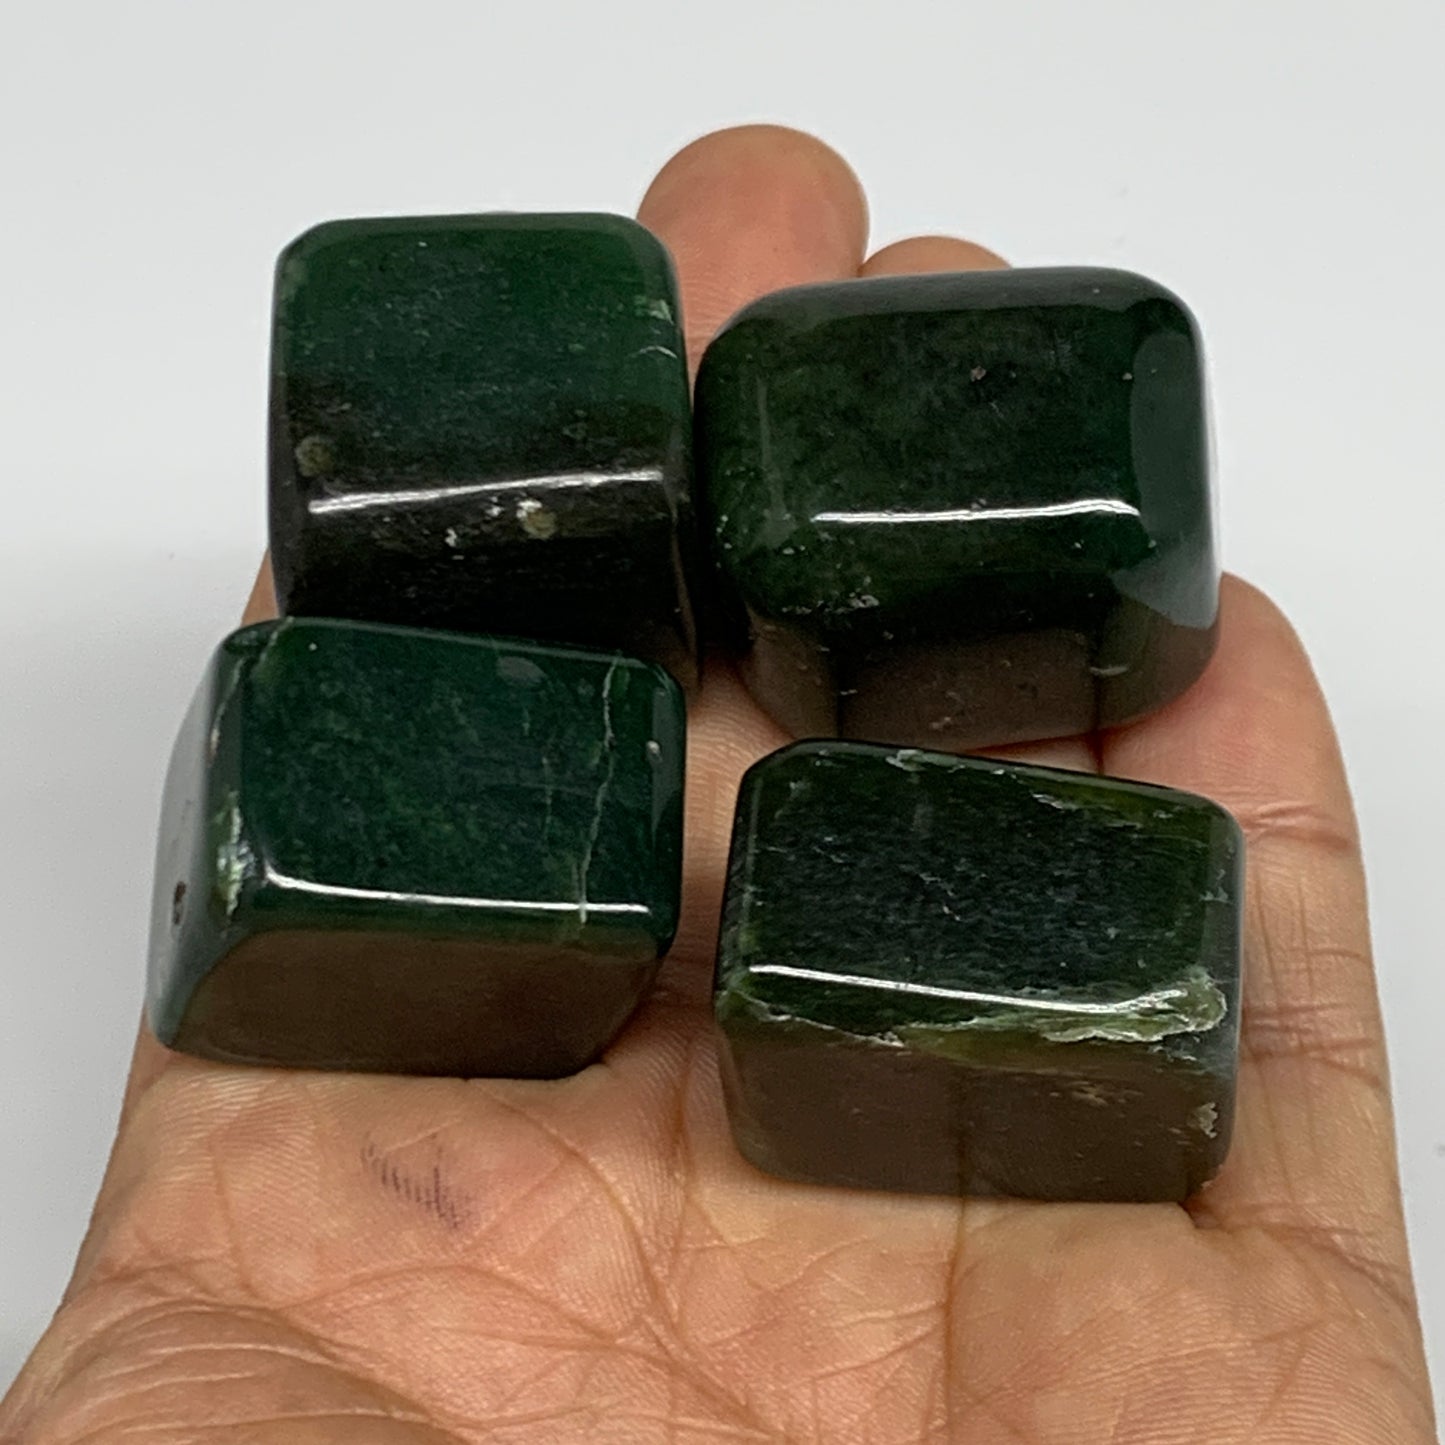 155.2g, 0.9"-1.2", 4pcs, Natural Nephrite Jade Tumbled Stone @Afghanistan,B31888